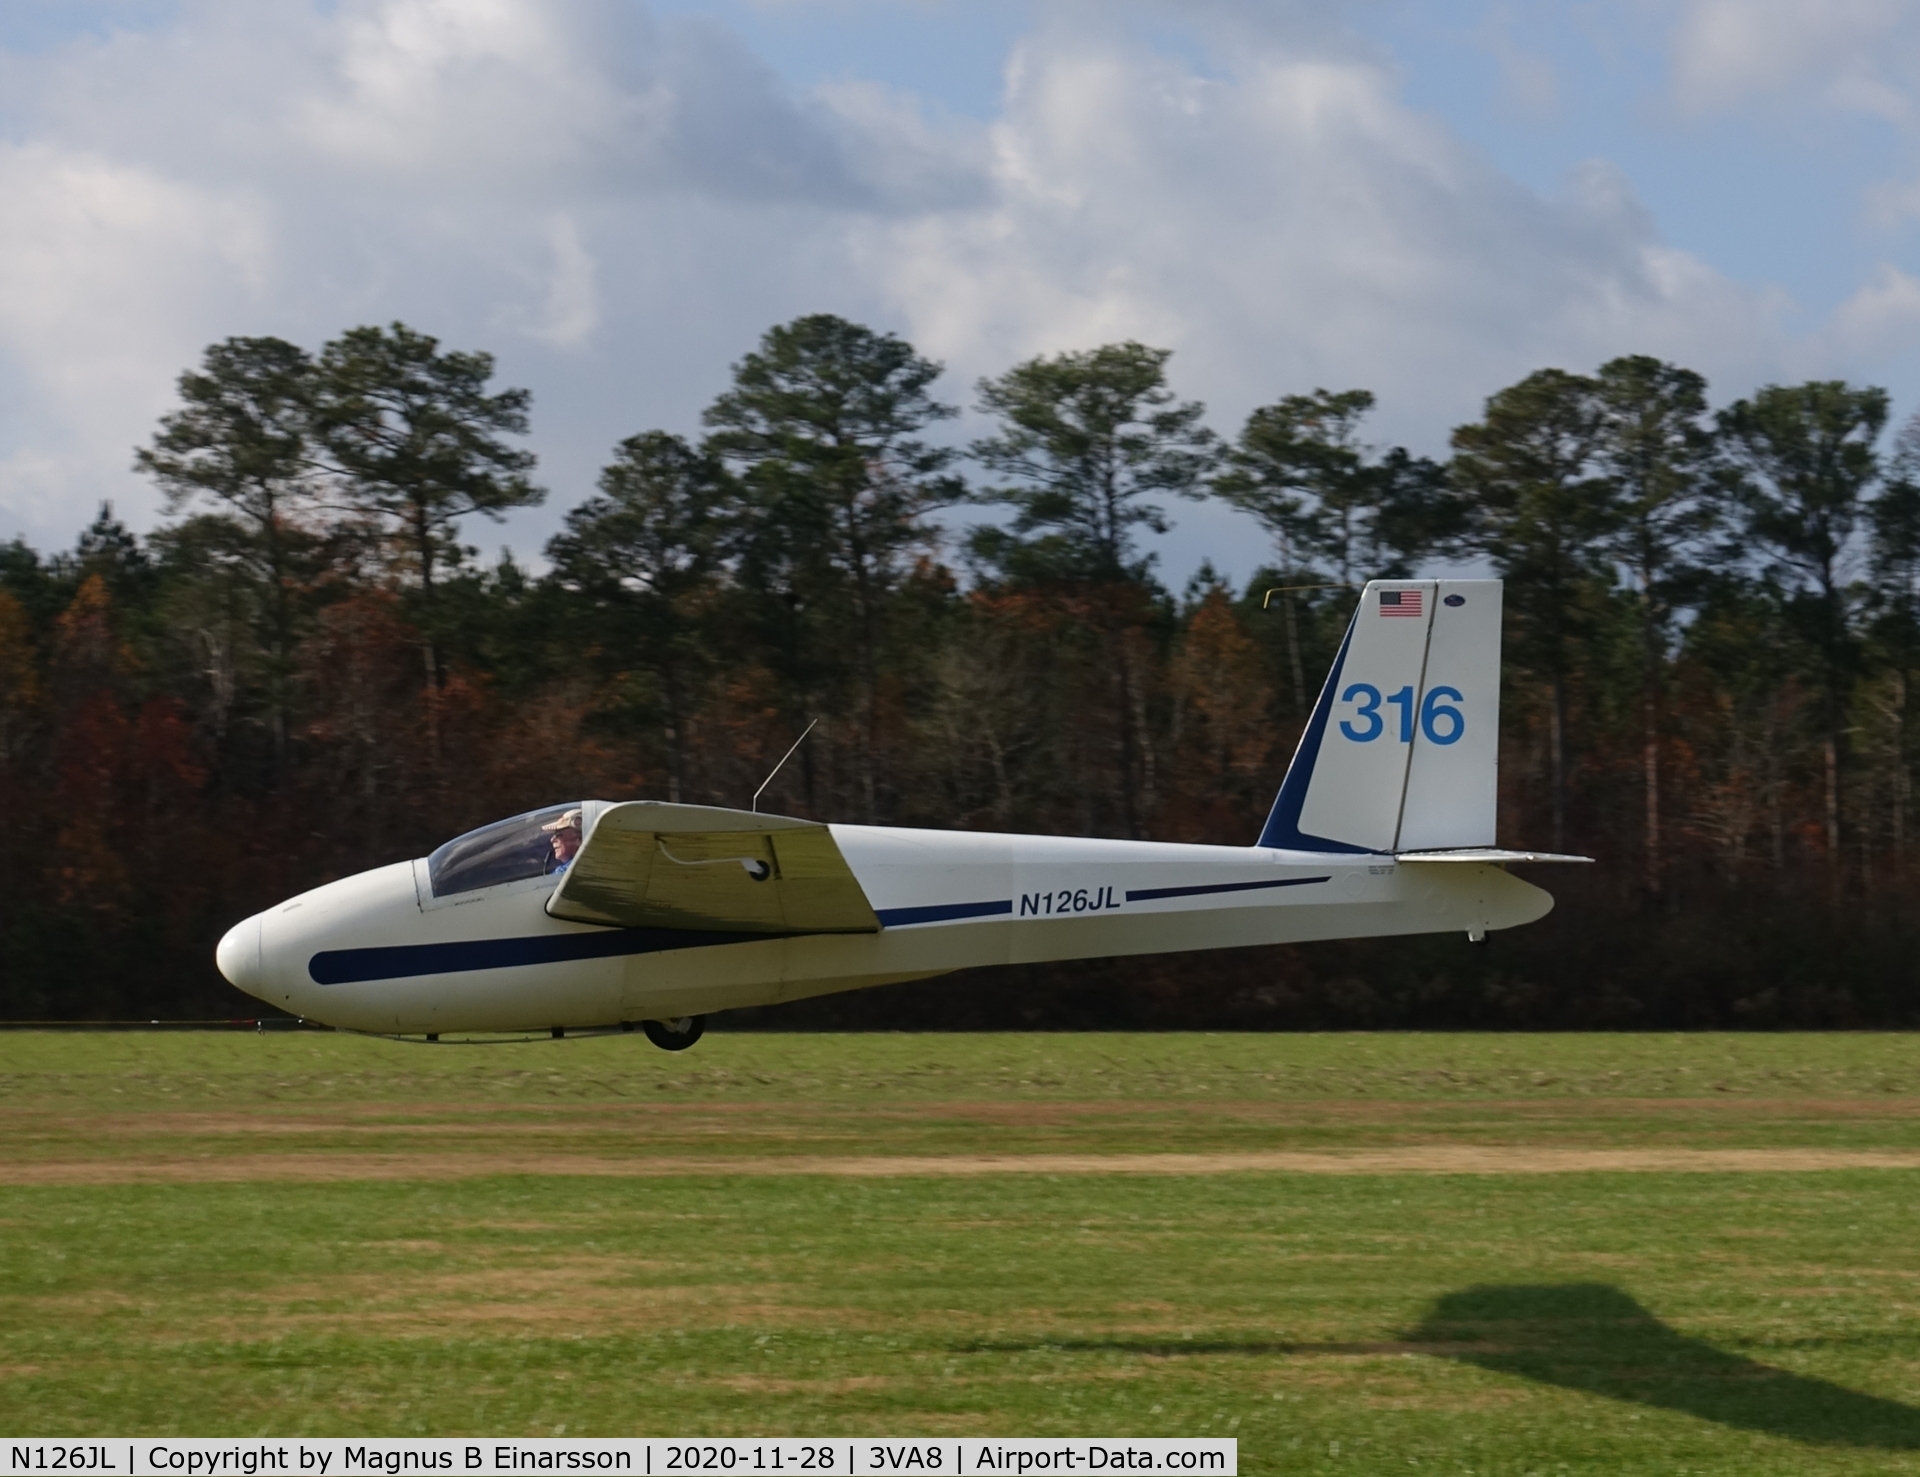 N126JL, 1965 Schweizer SGS 1-26B C/N 316, Take off at Garner airport VA